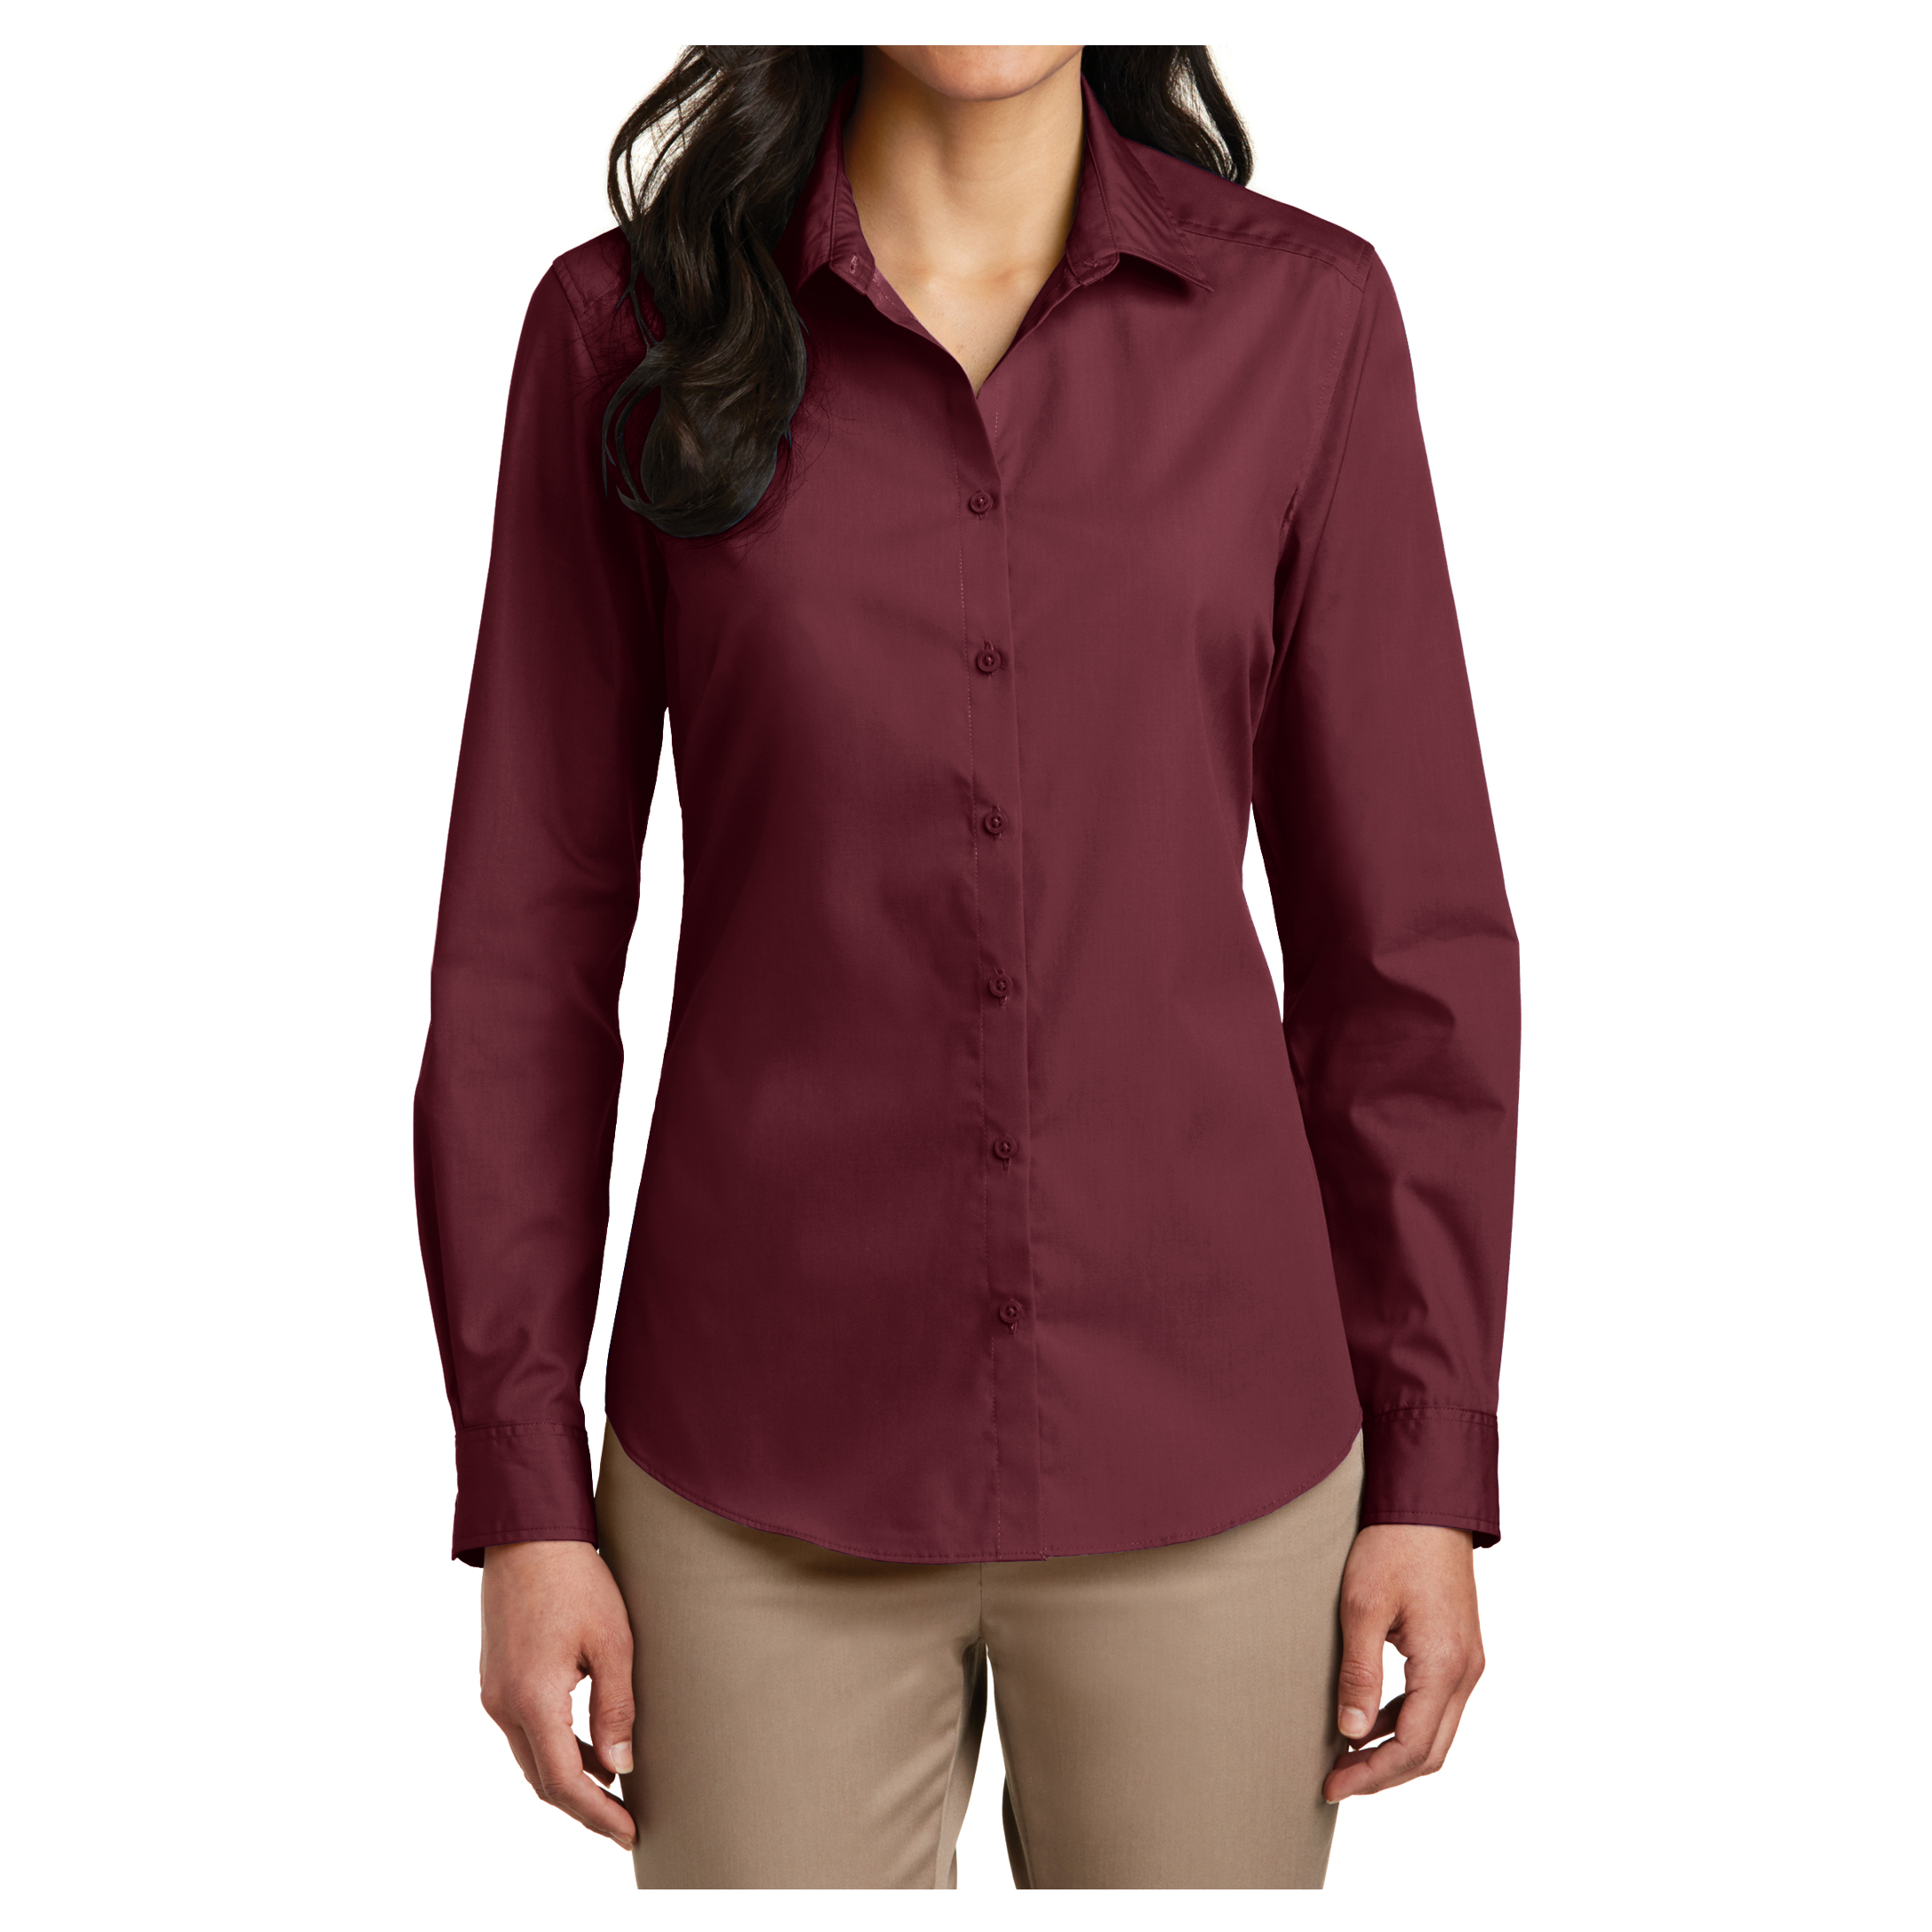 Mafoose Women Cotton/Polyester Female Shirt Burgundy XS - image 1 of 6